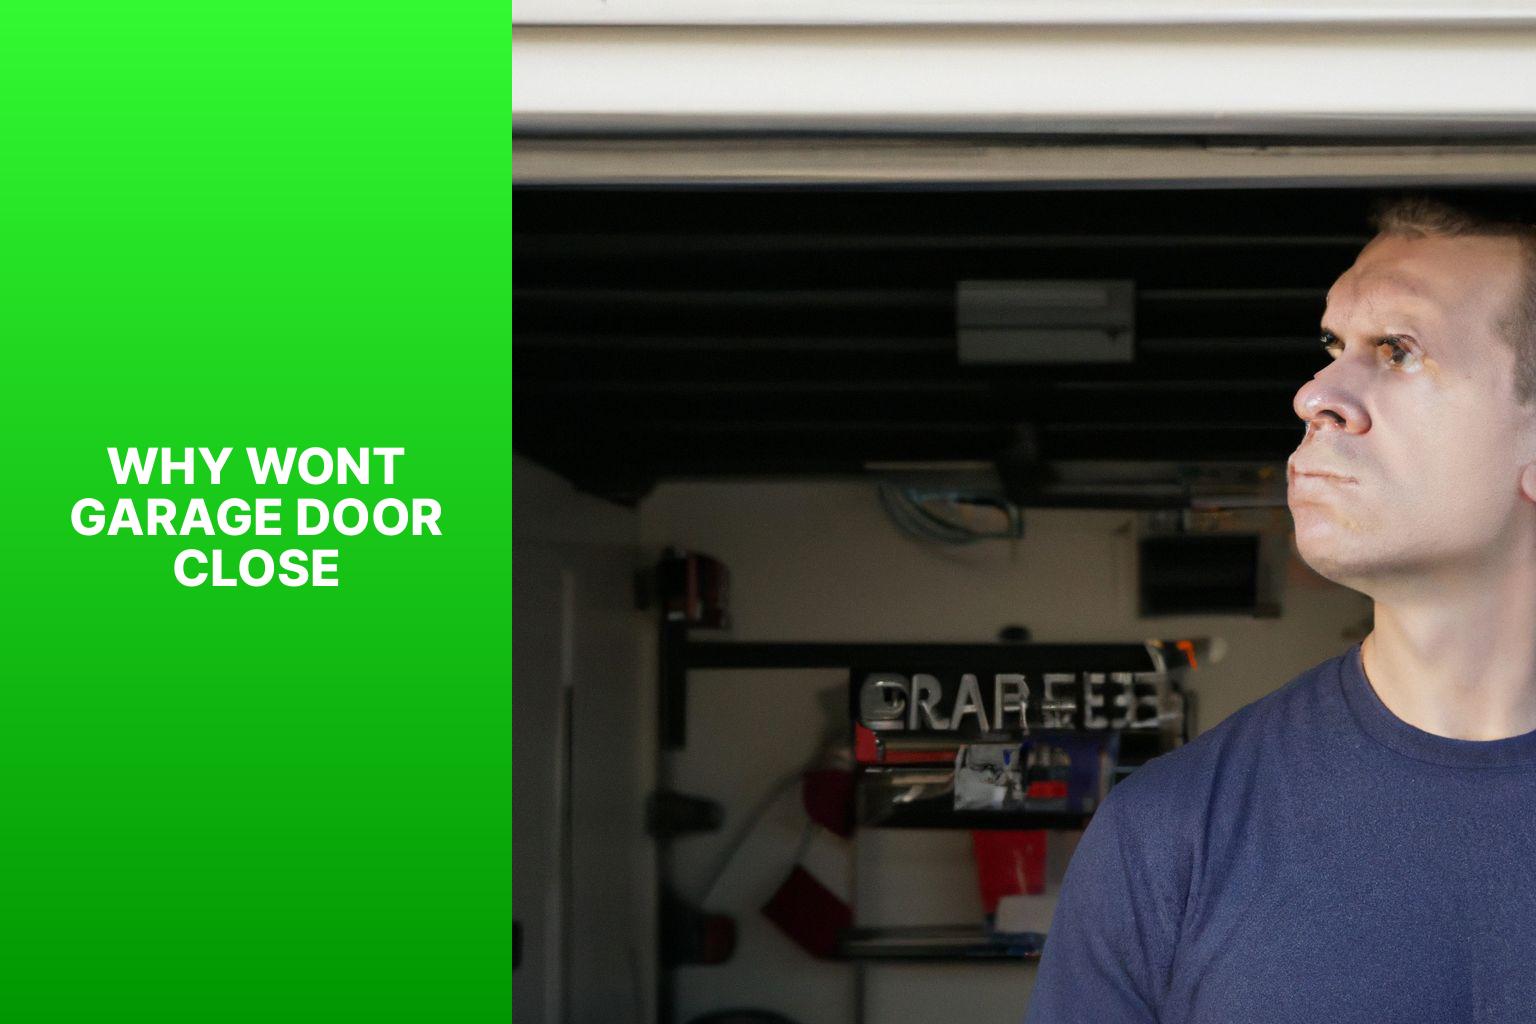 Why Wont Garage Door Close